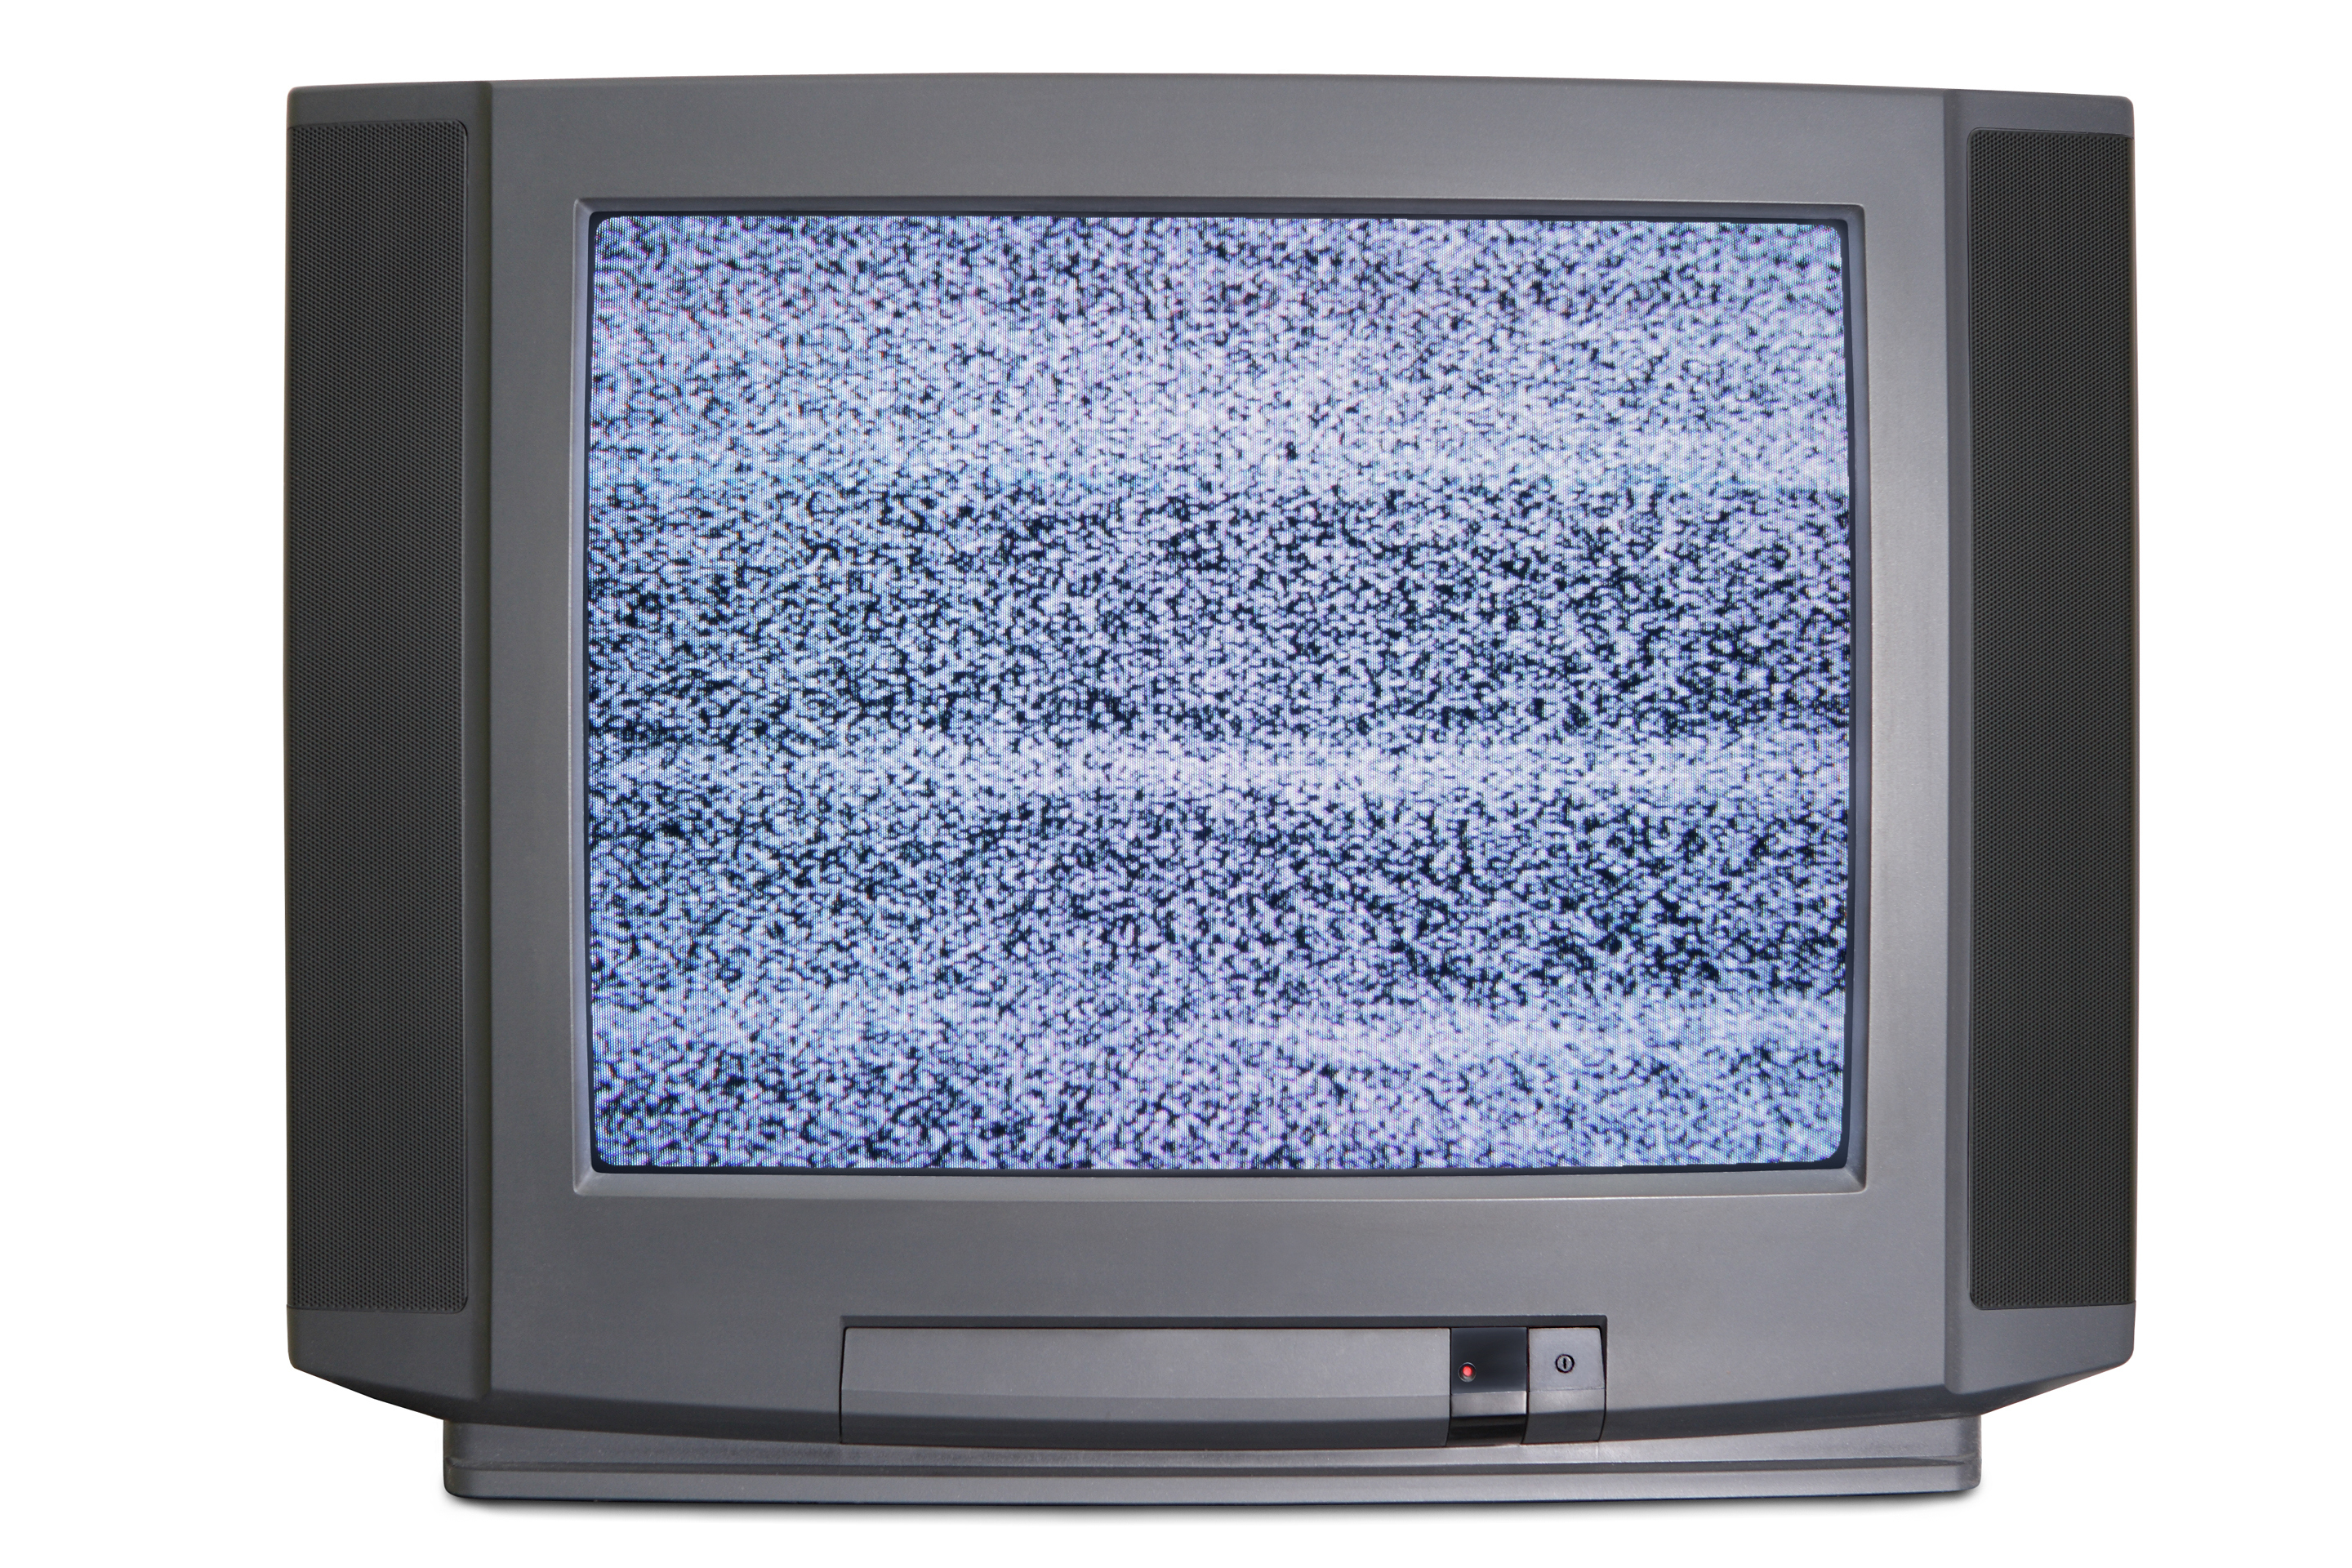 an analog TV